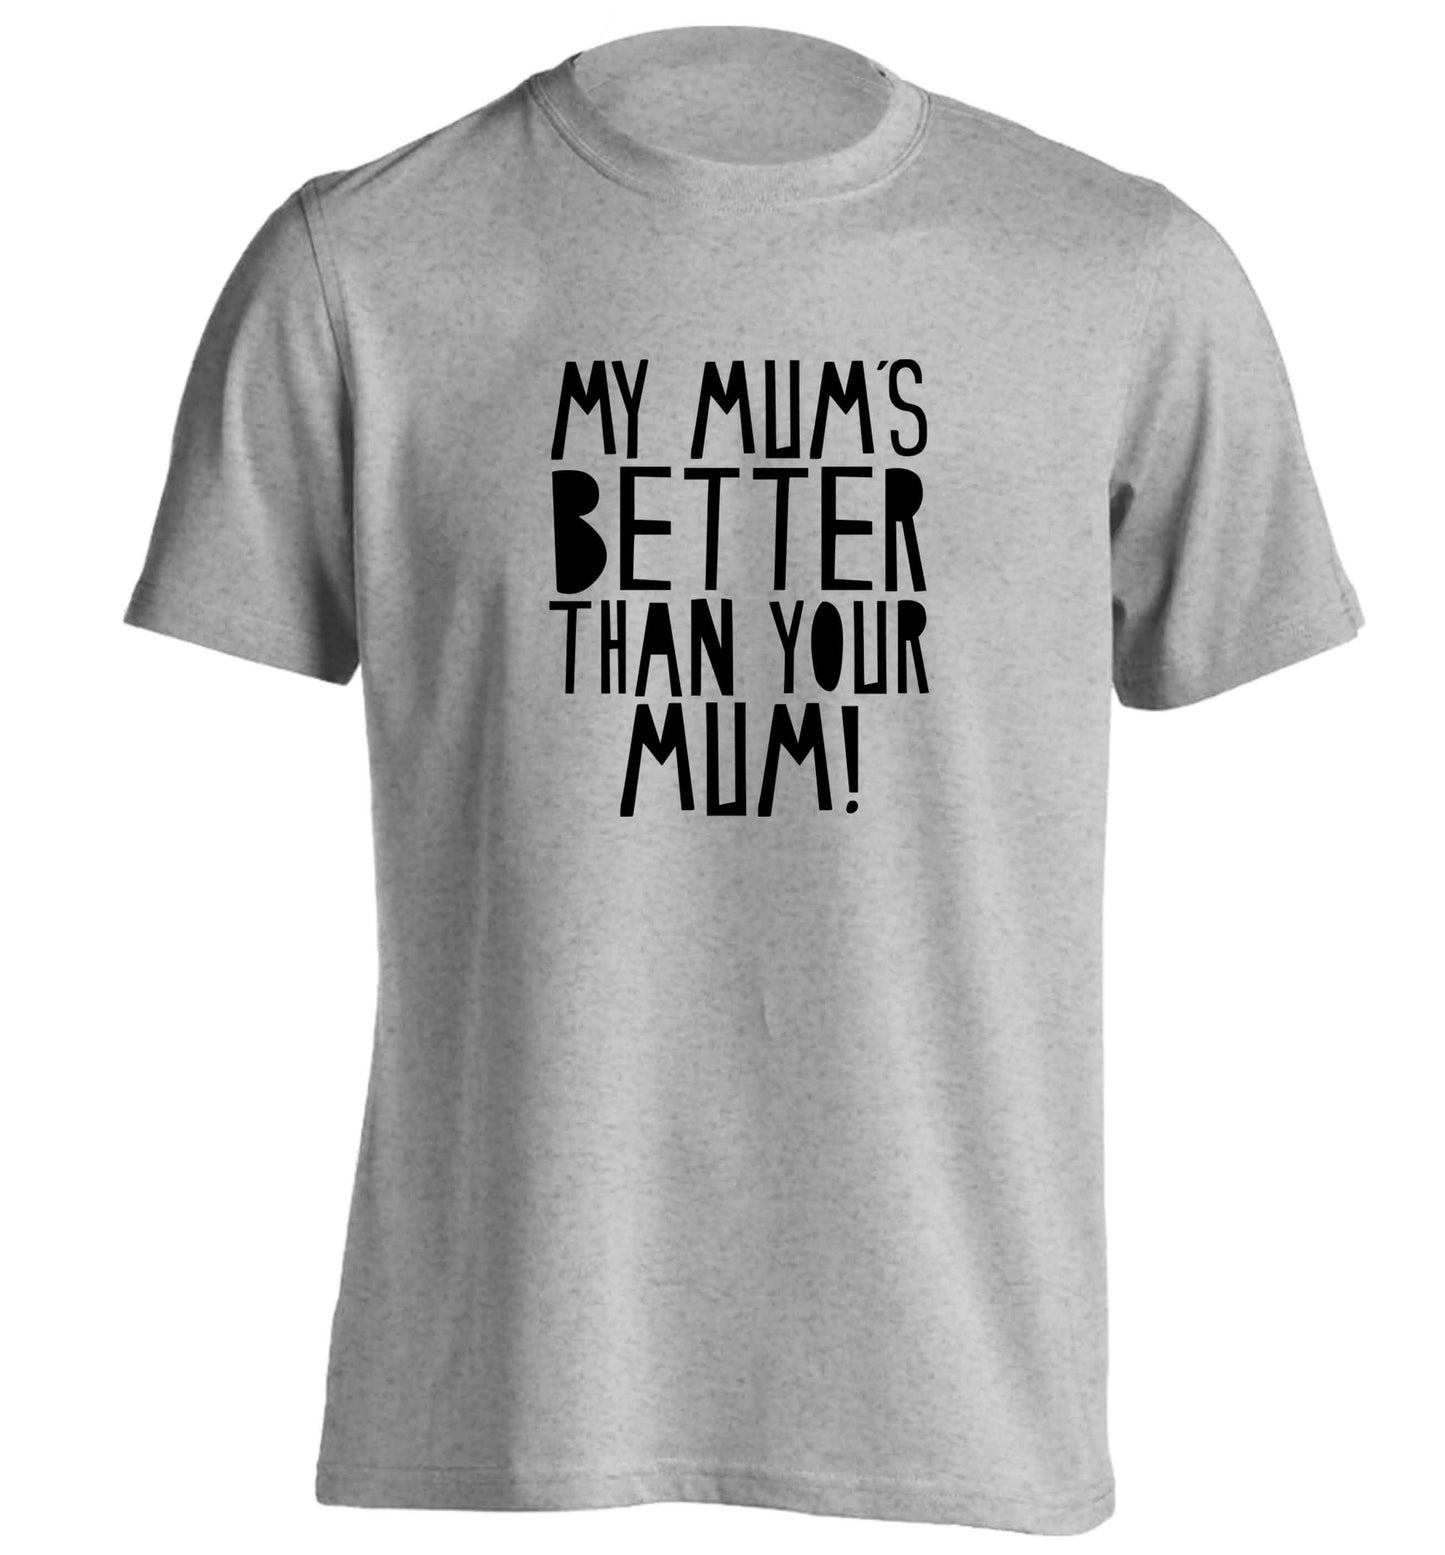 My mum's better than your mum adults unisex grey Tshirt 2XL